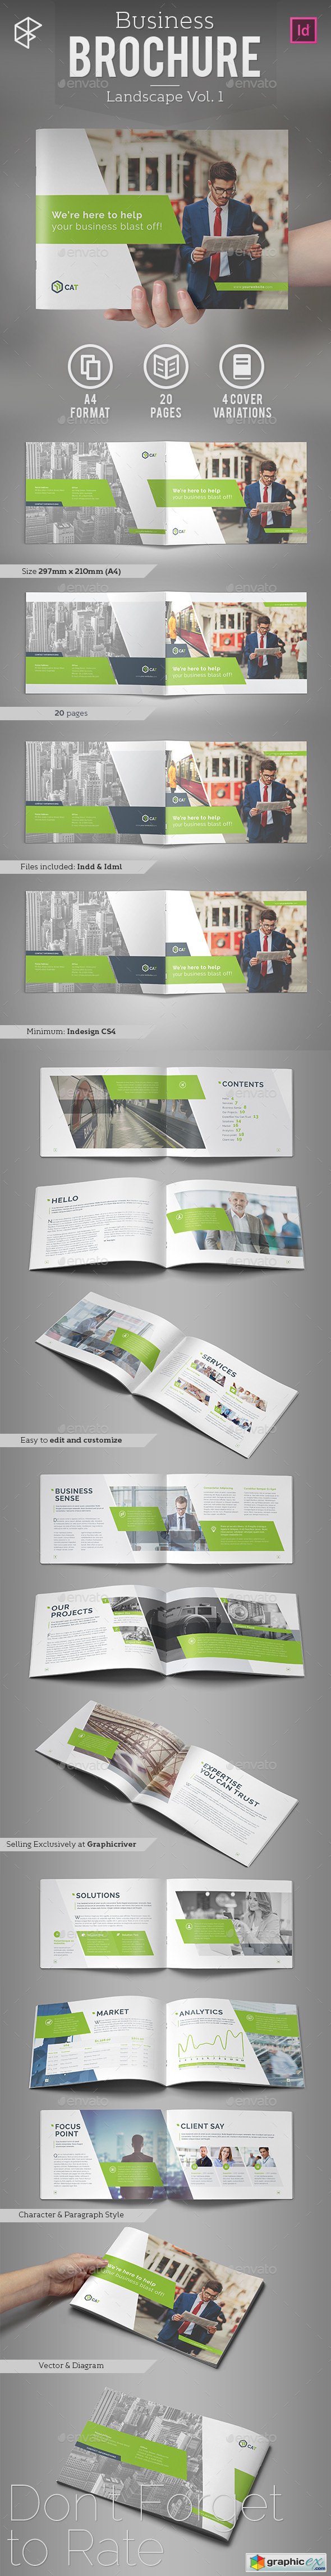 Business Brochure - Landscape Vol 1